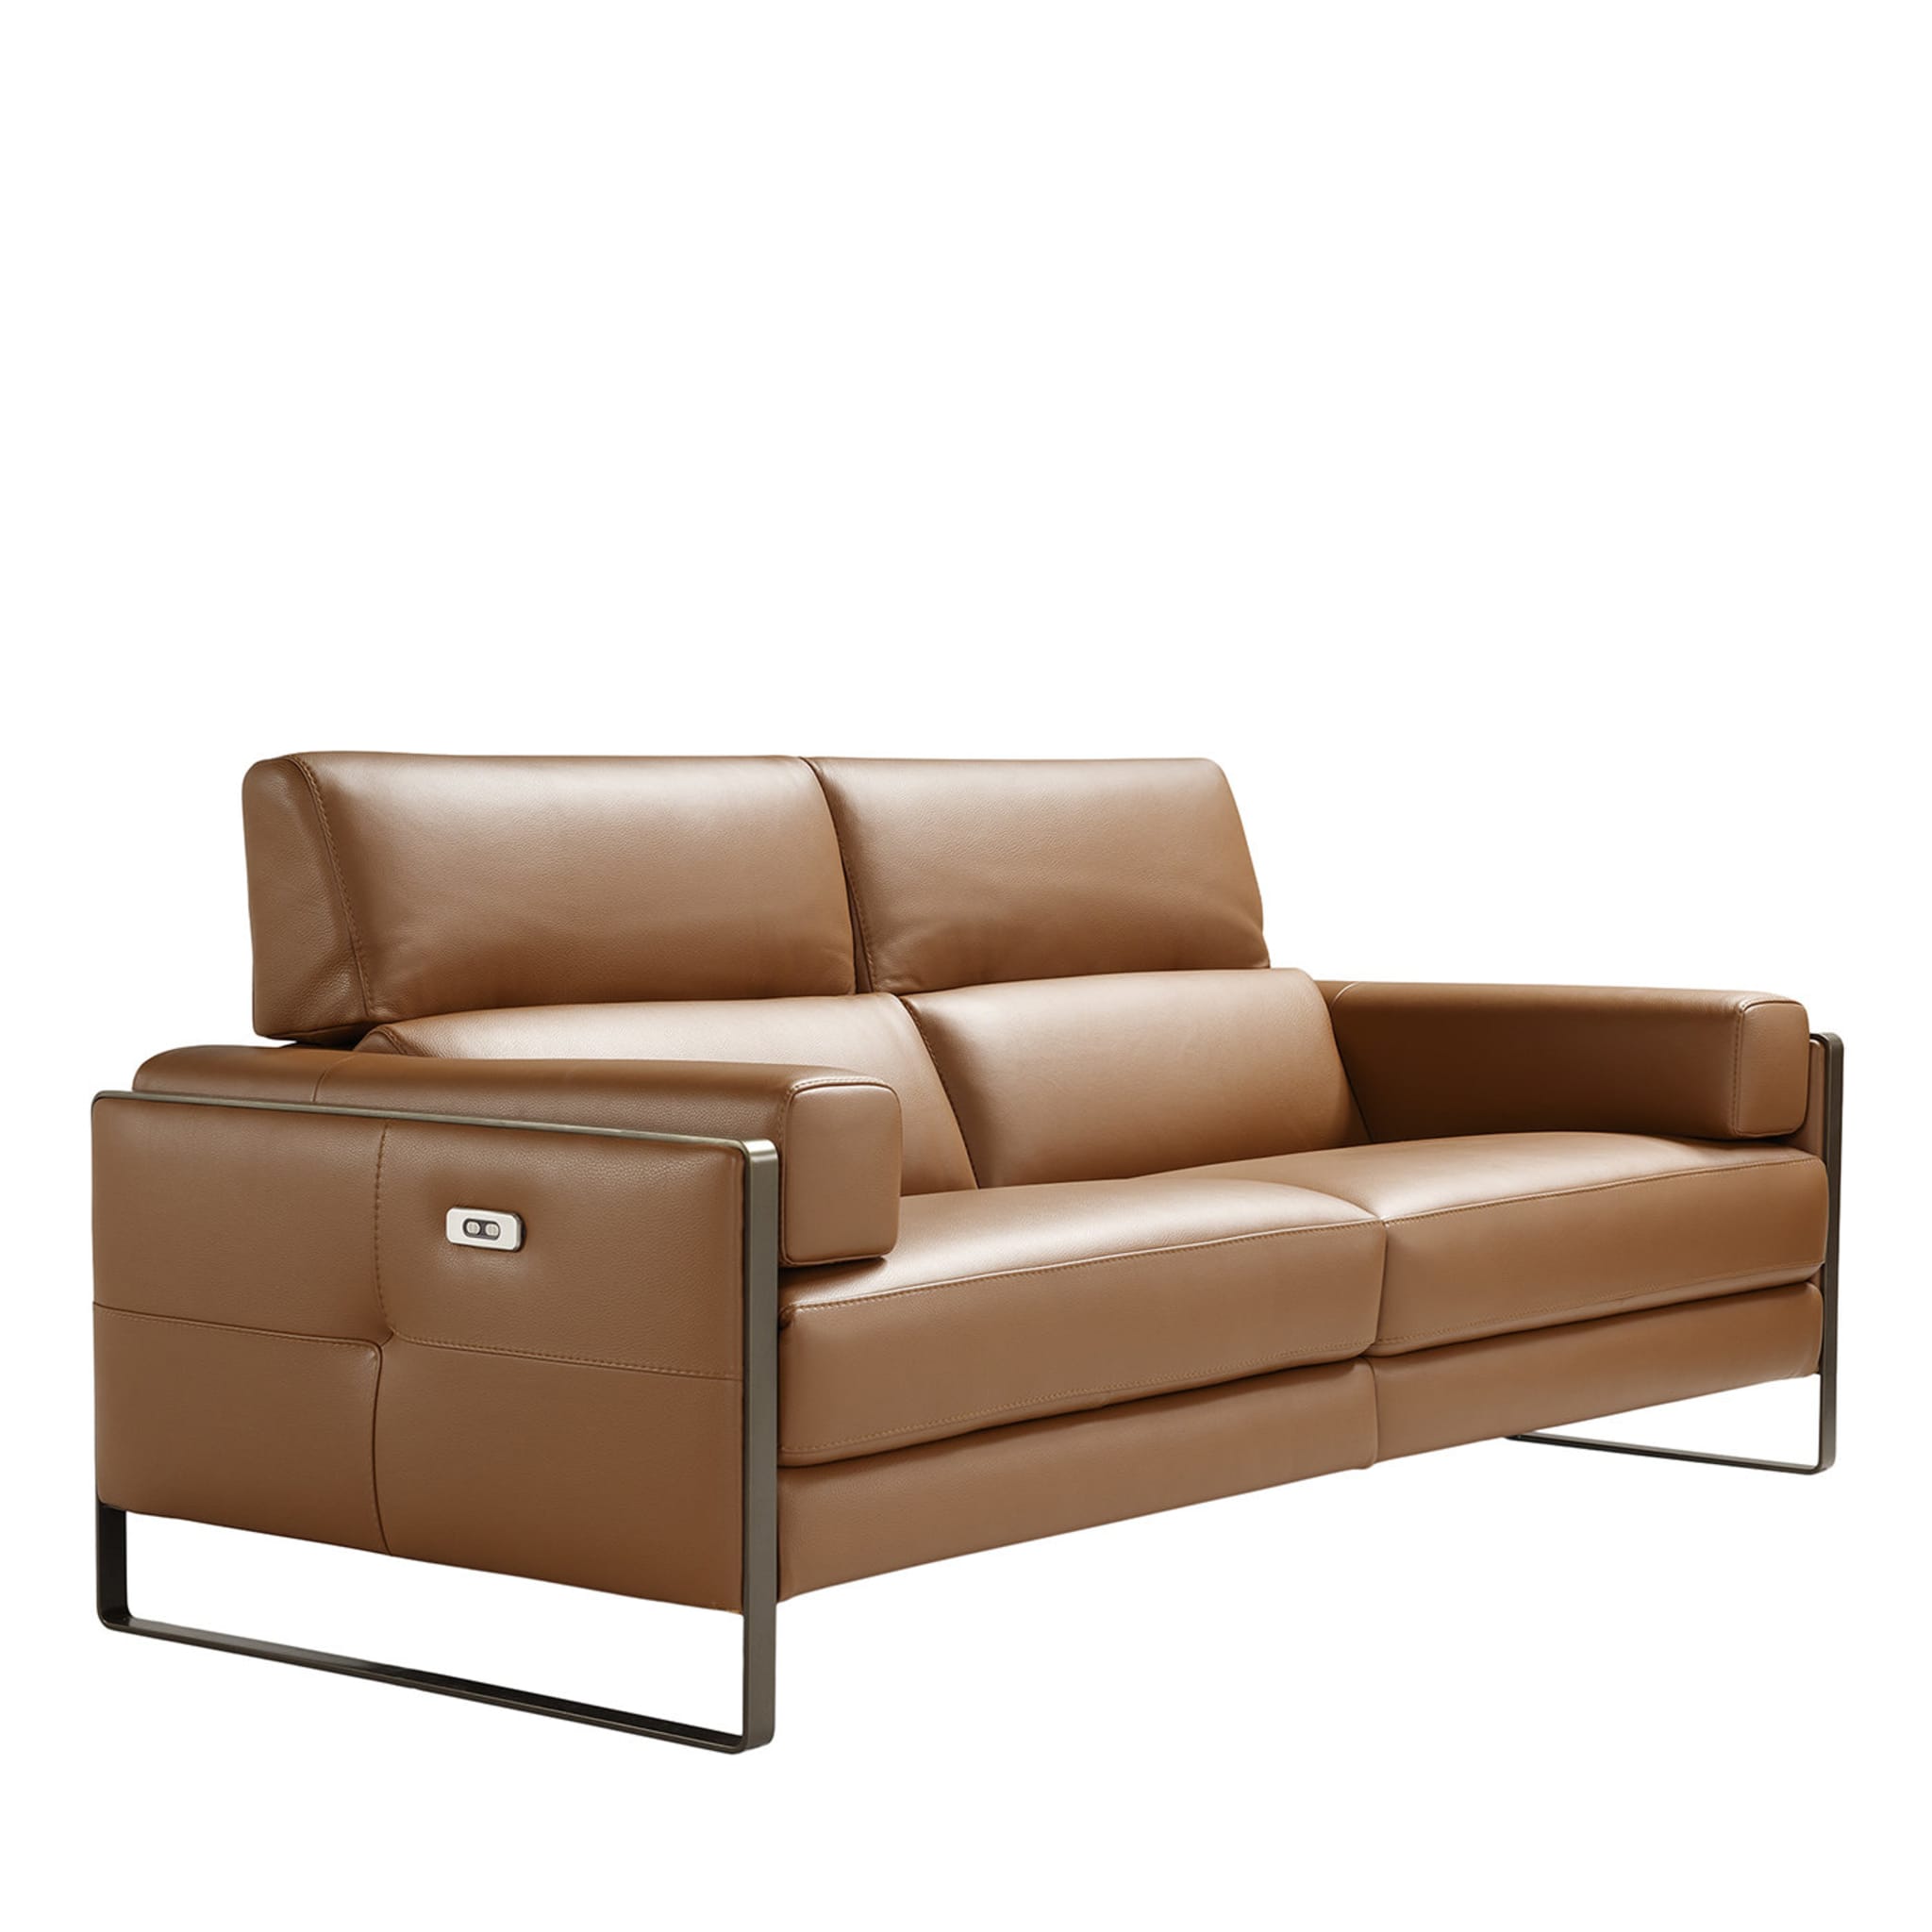 Daunia Brown Leather 2-Seater Sofa - Main view